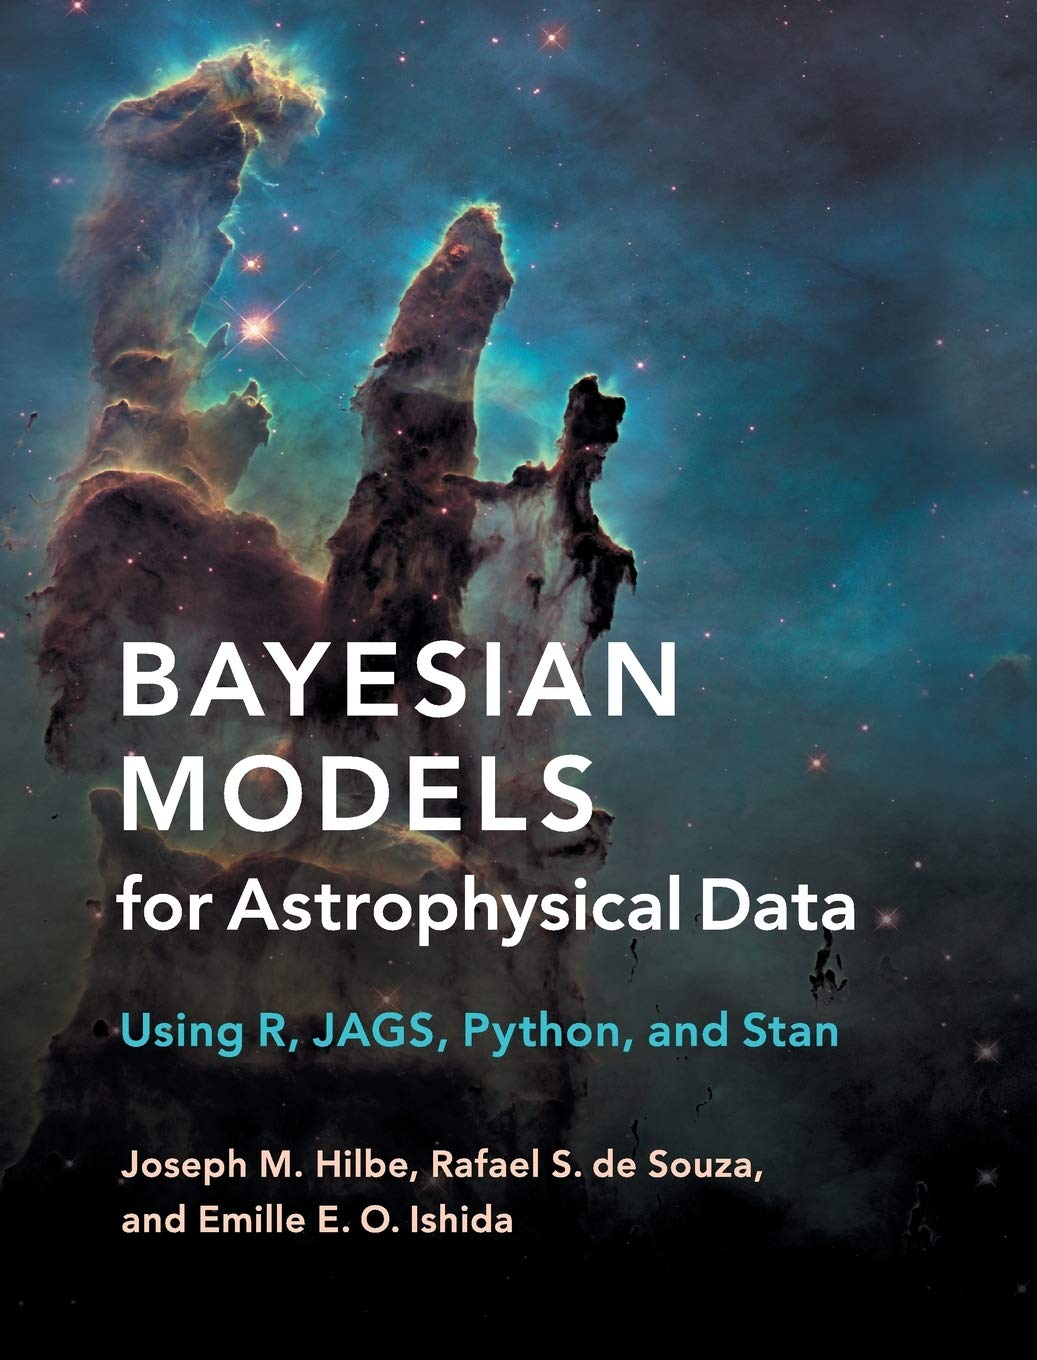 Bayesian Models for Astrophysical Data, by Rafael de Souza